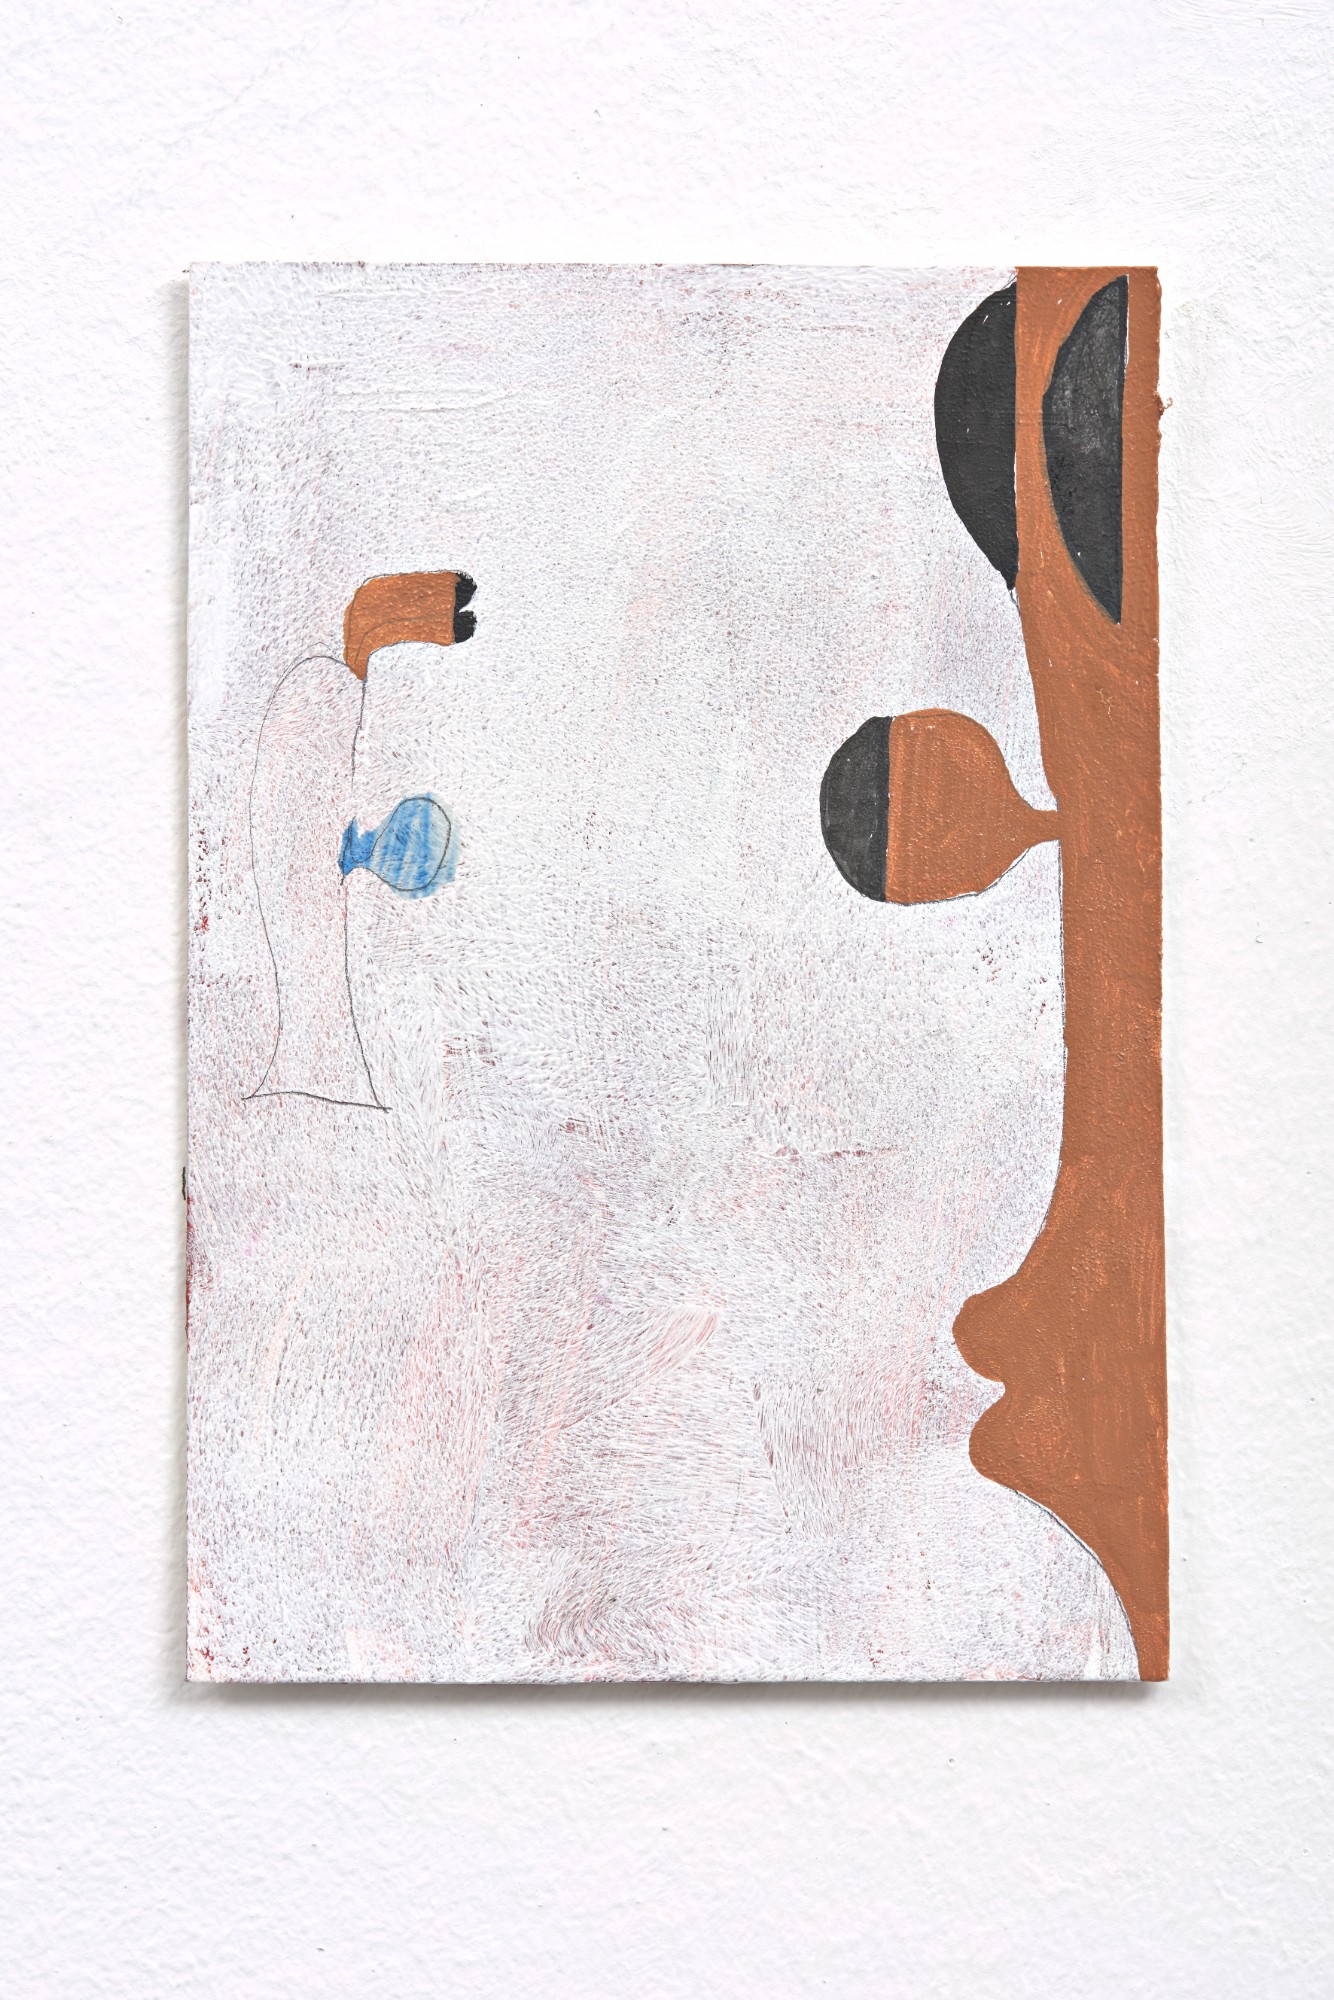 Ulrich Wulff, Ohne Worte III, 2018, crayon, ink, goauche, wall paint on board, 21 x 14,5 cm